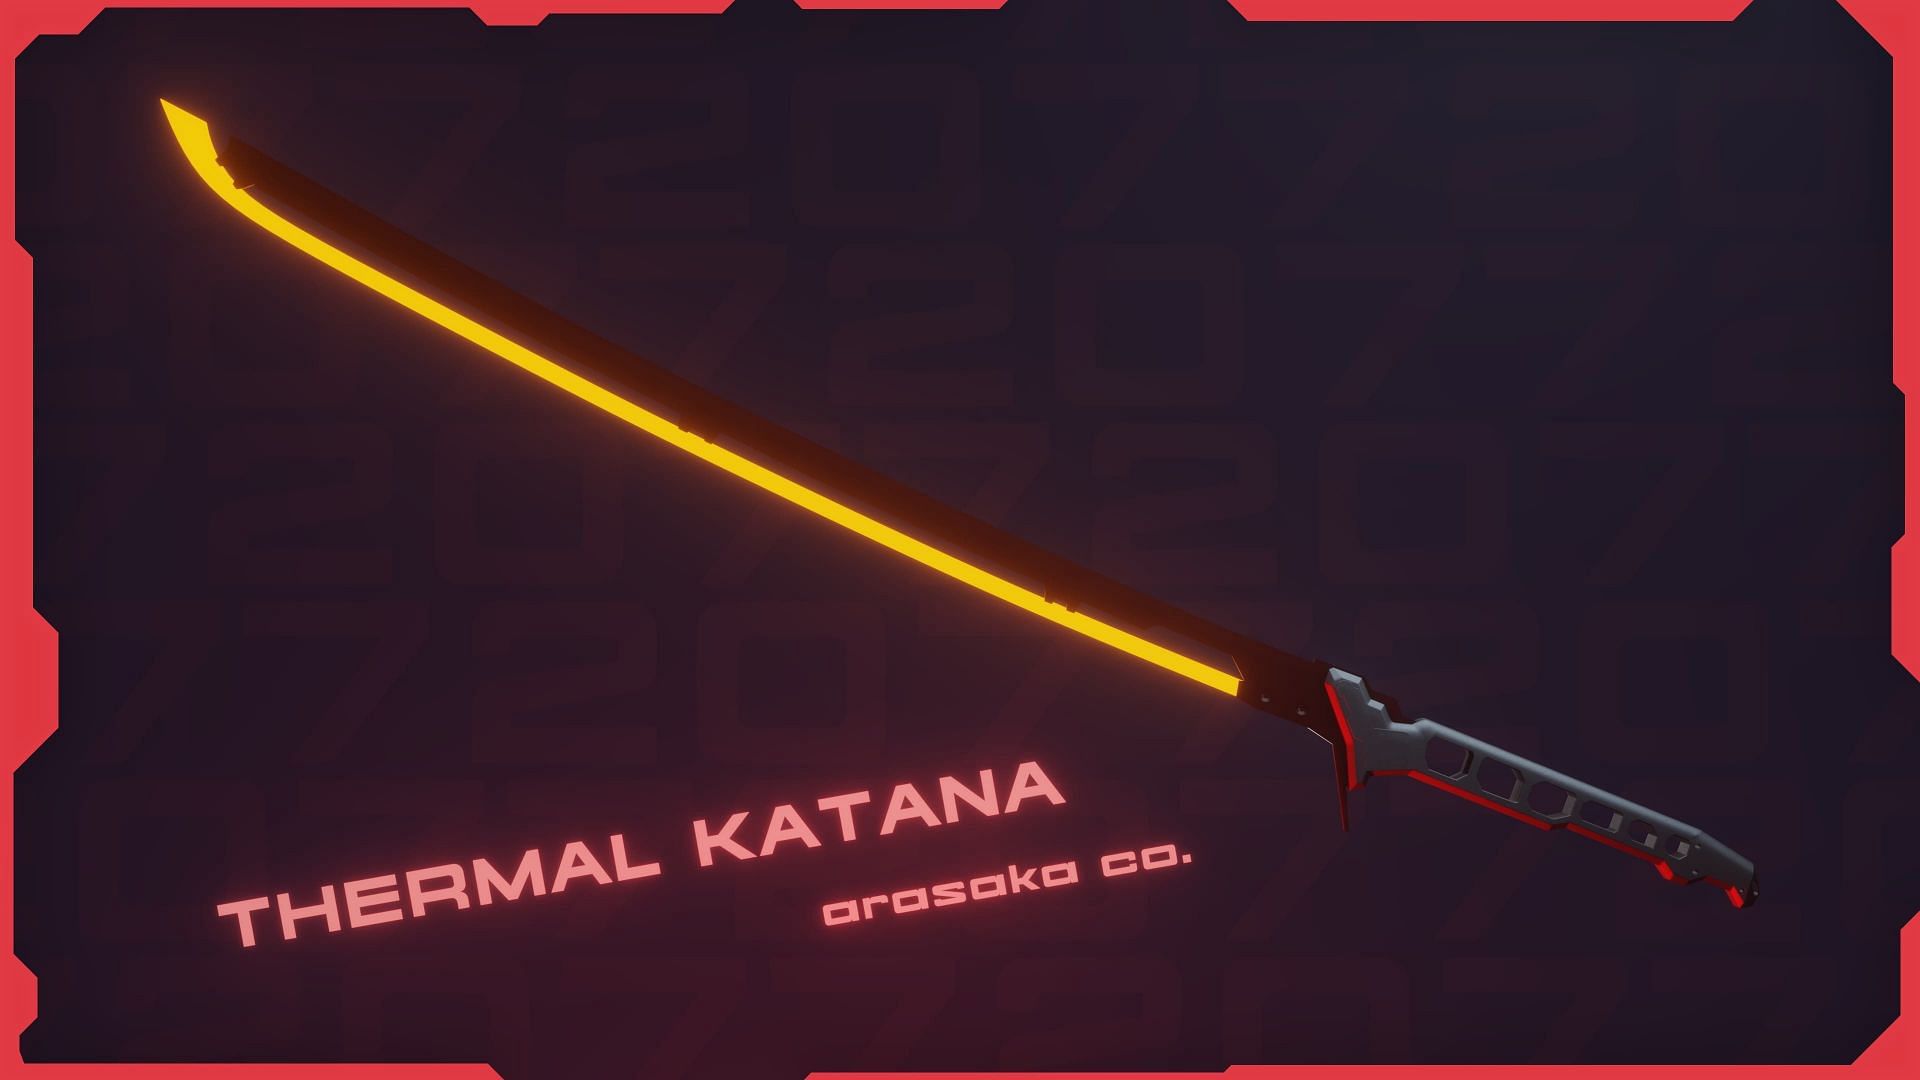 Acquiring the Thermal Katana in Cyberpunk 2077 (Image via CD Projekt Red)